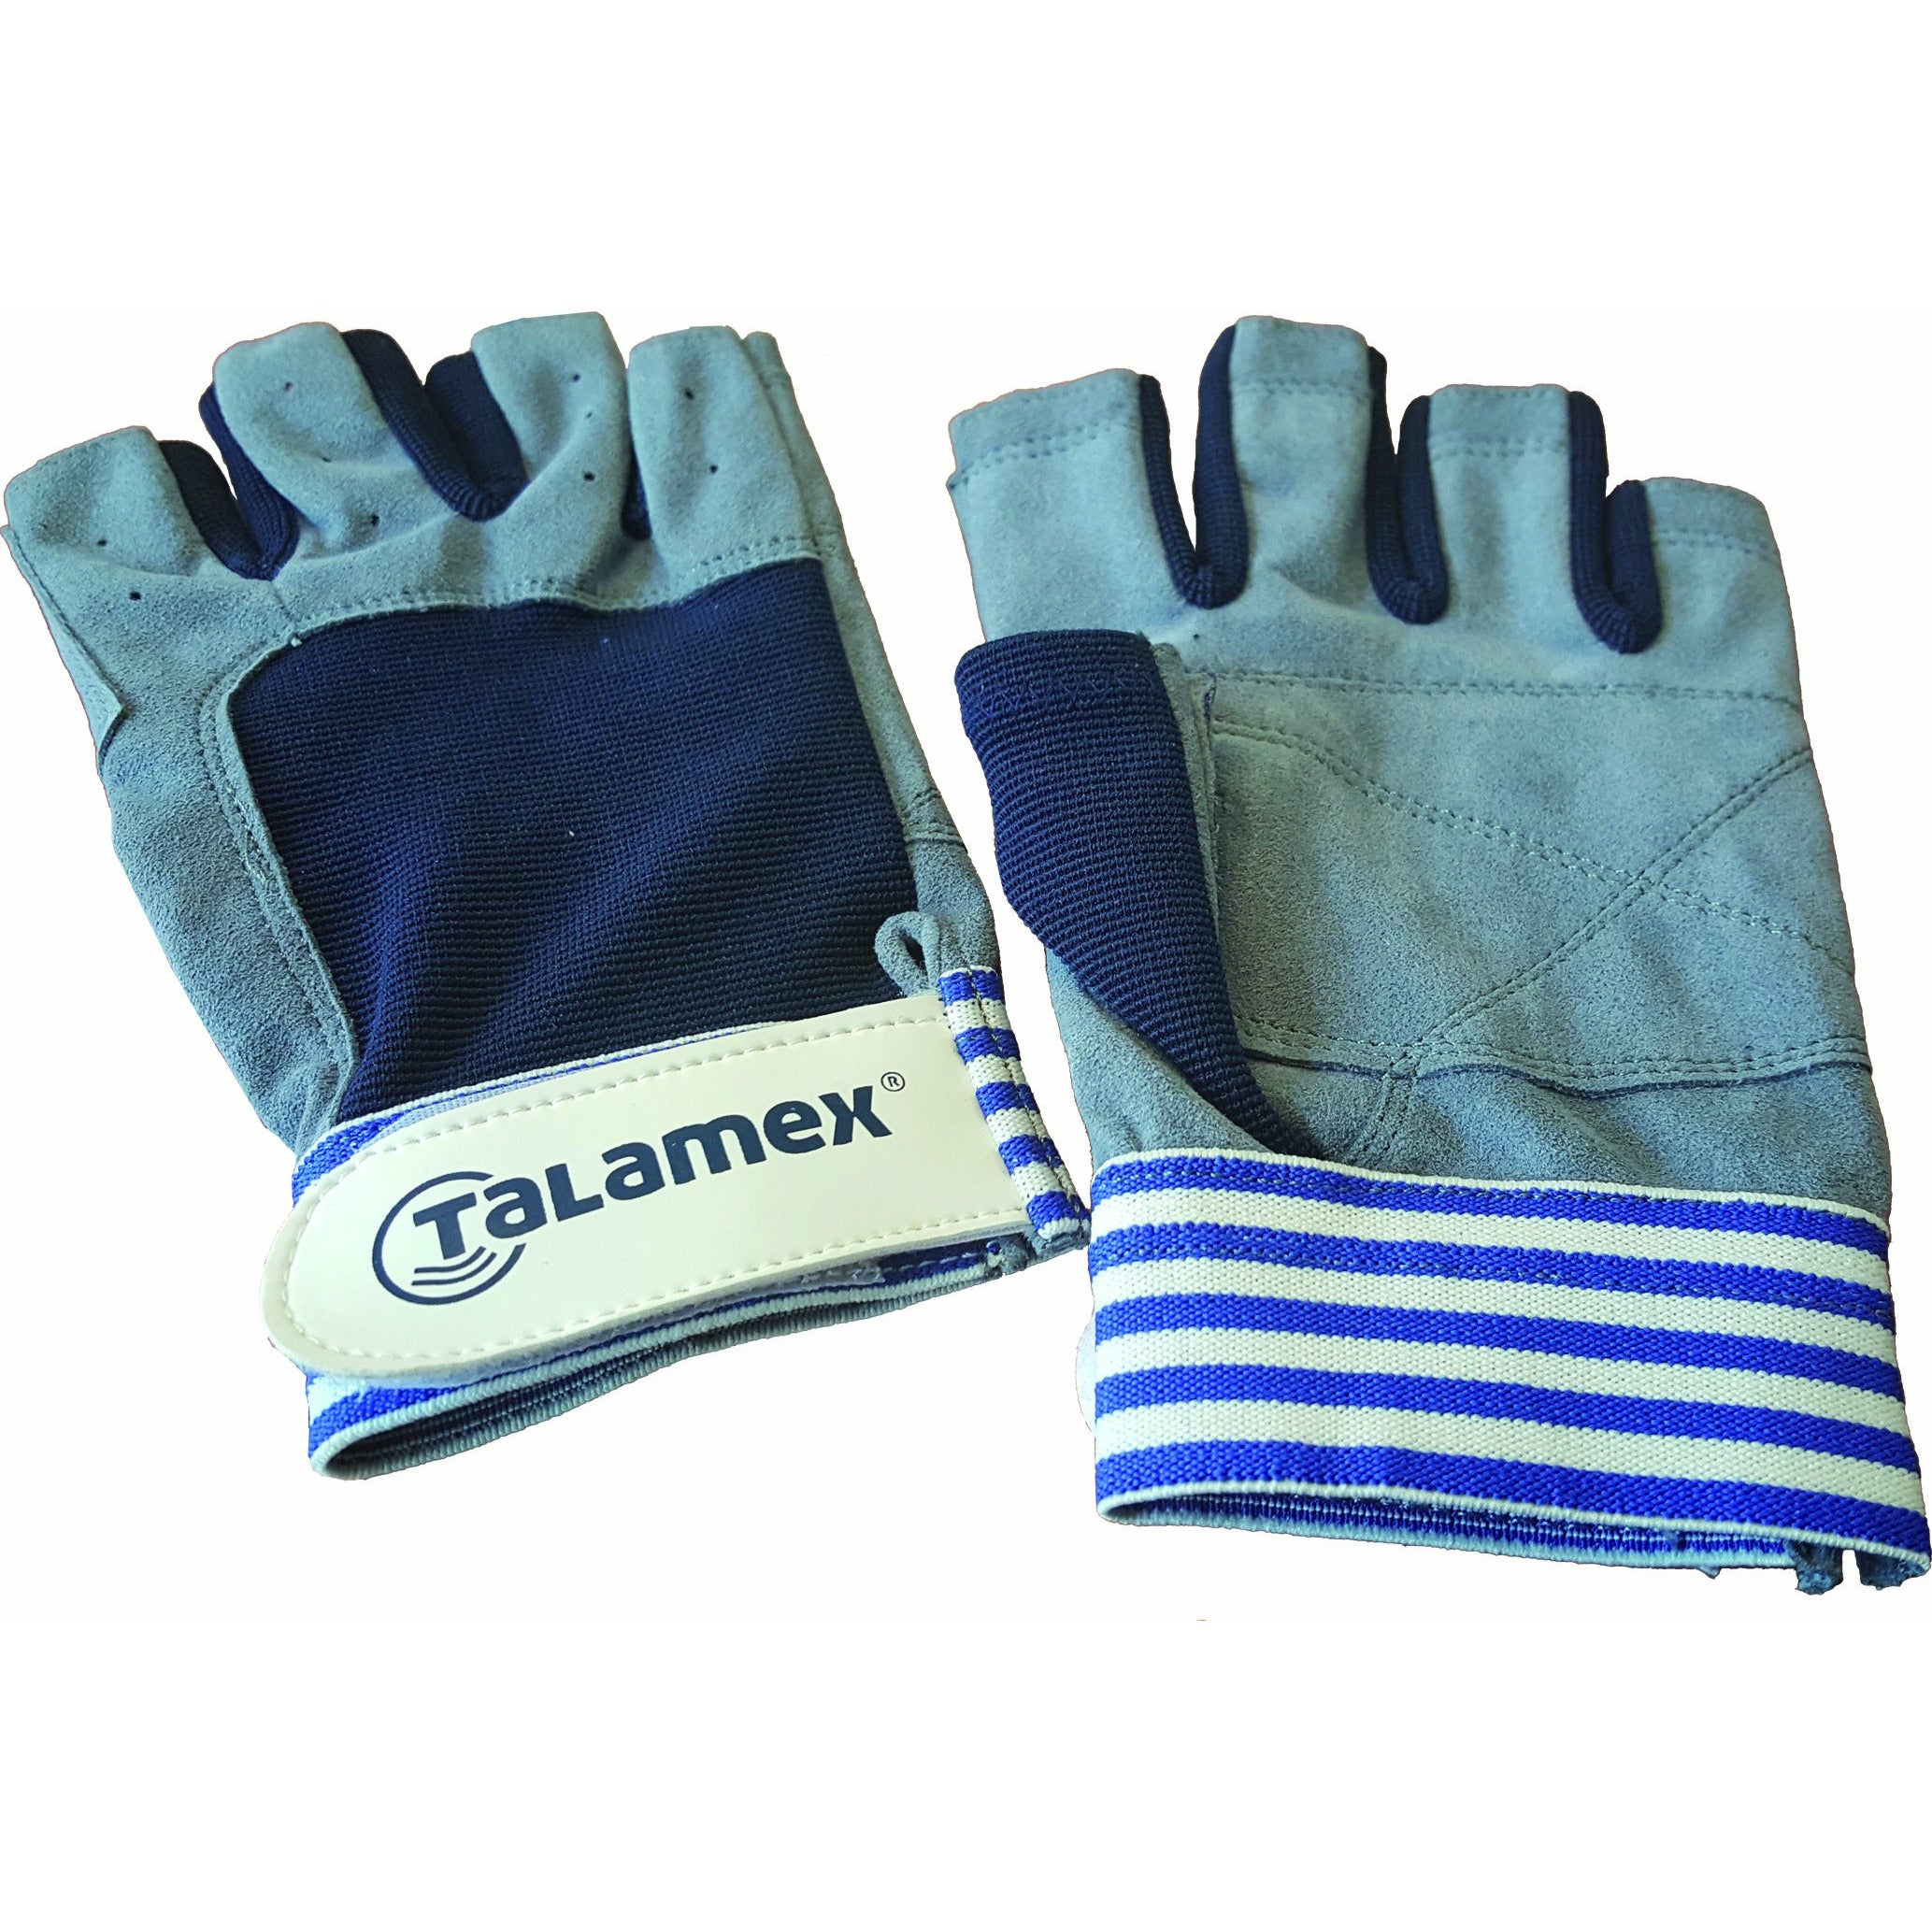 Talamex S'Gloves Amara Med/Open 20805002